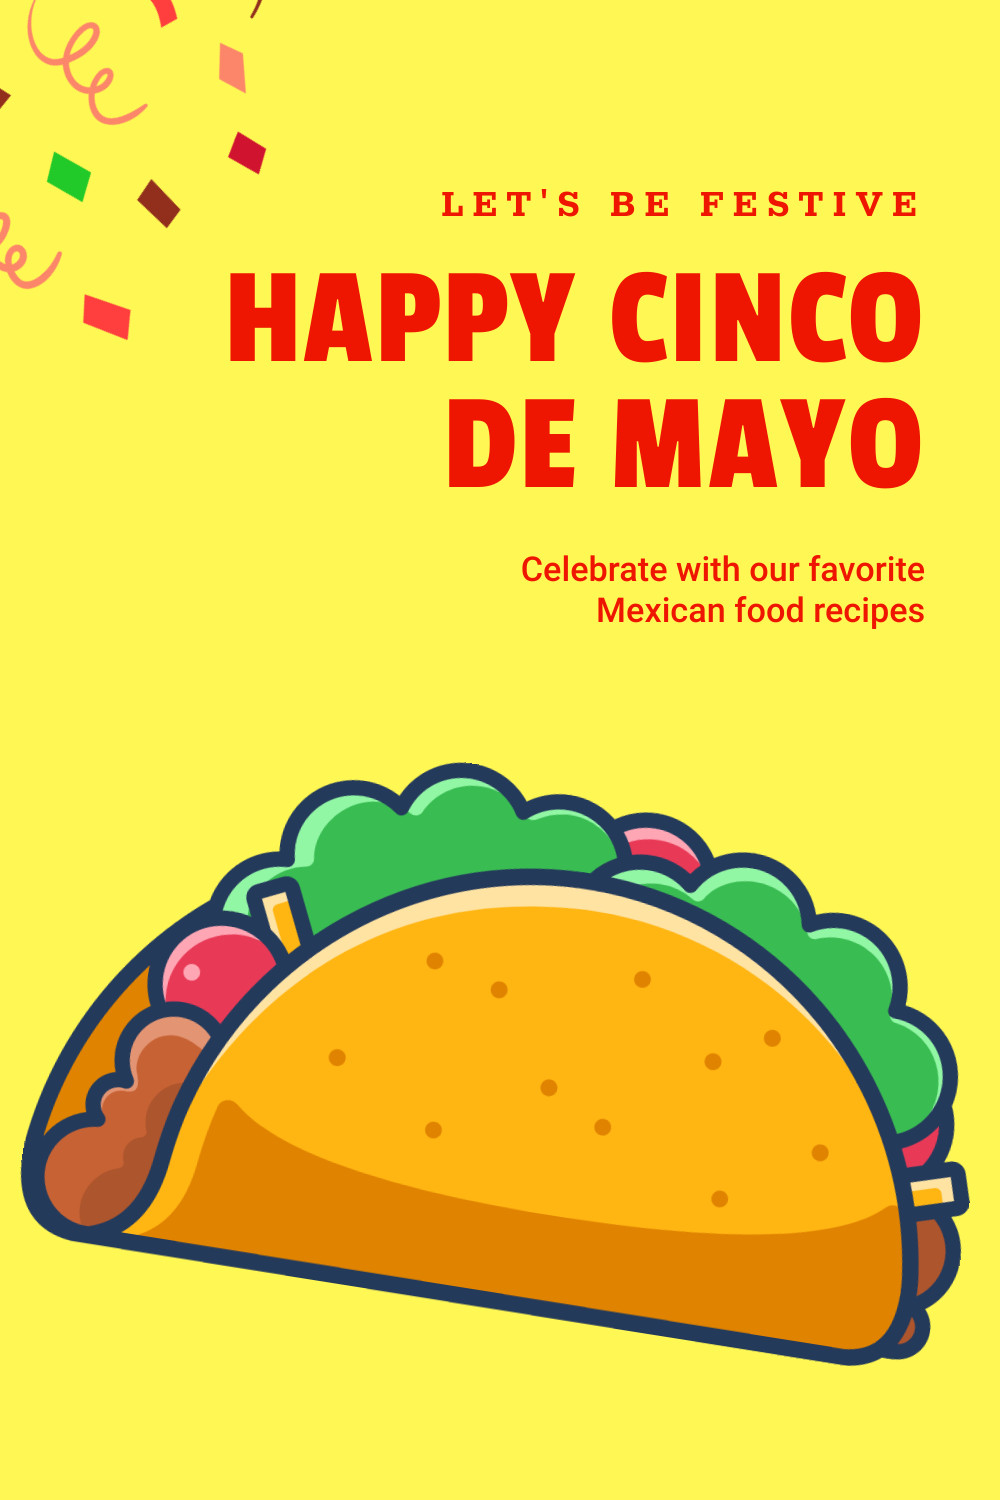 Happy Cinco de Mayo with Festive Recipes Facebook Cover 820x360